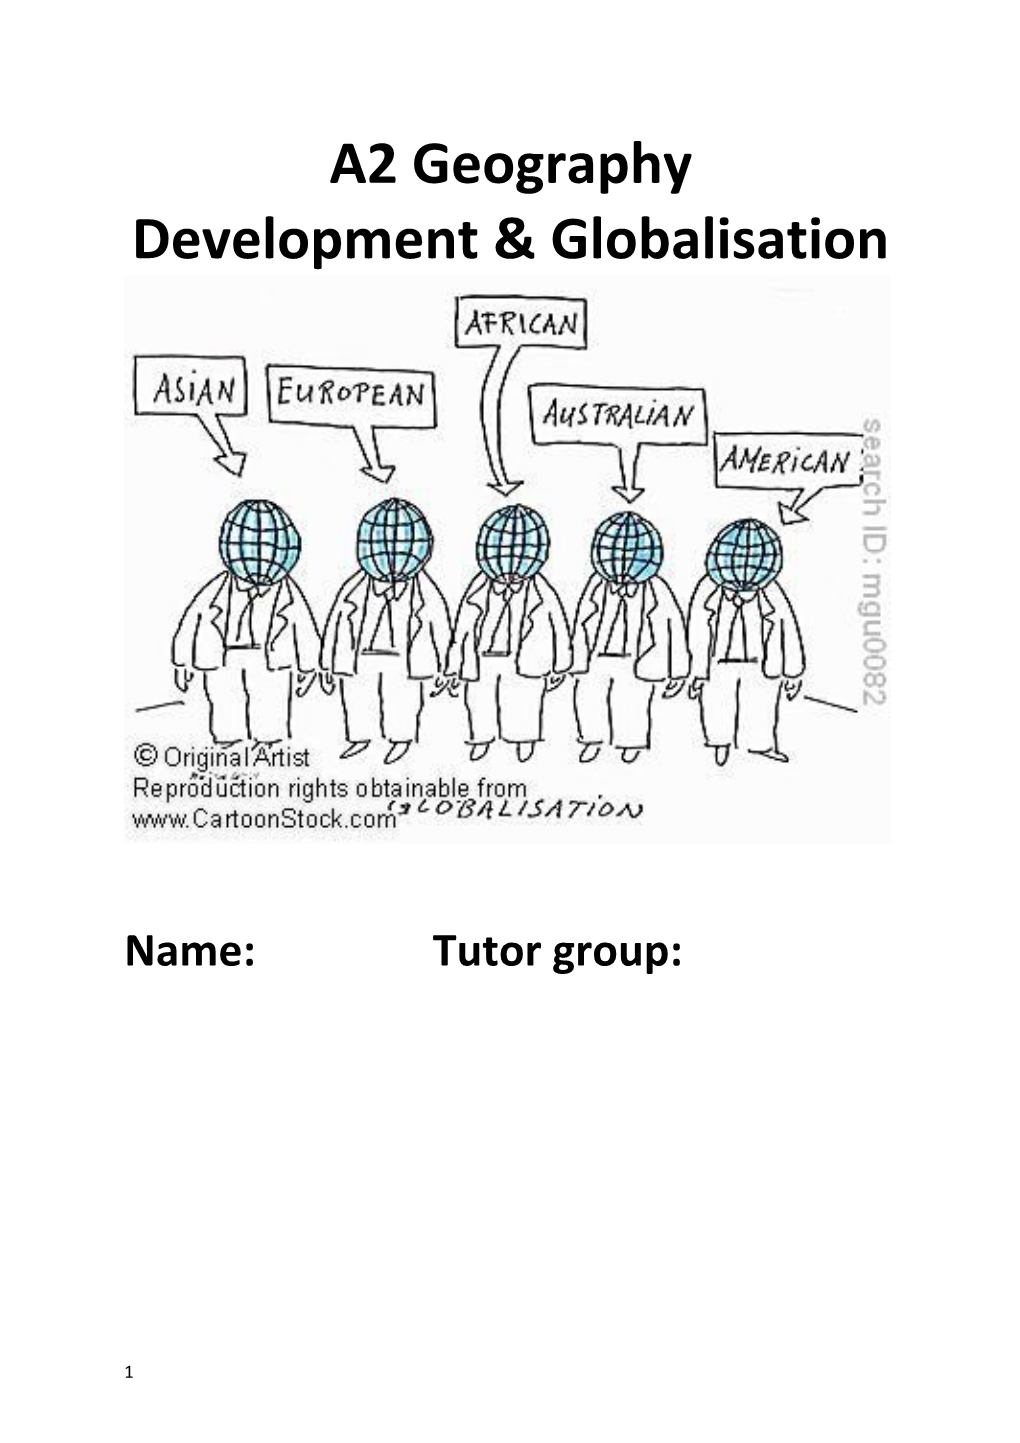 Development & Globalisation